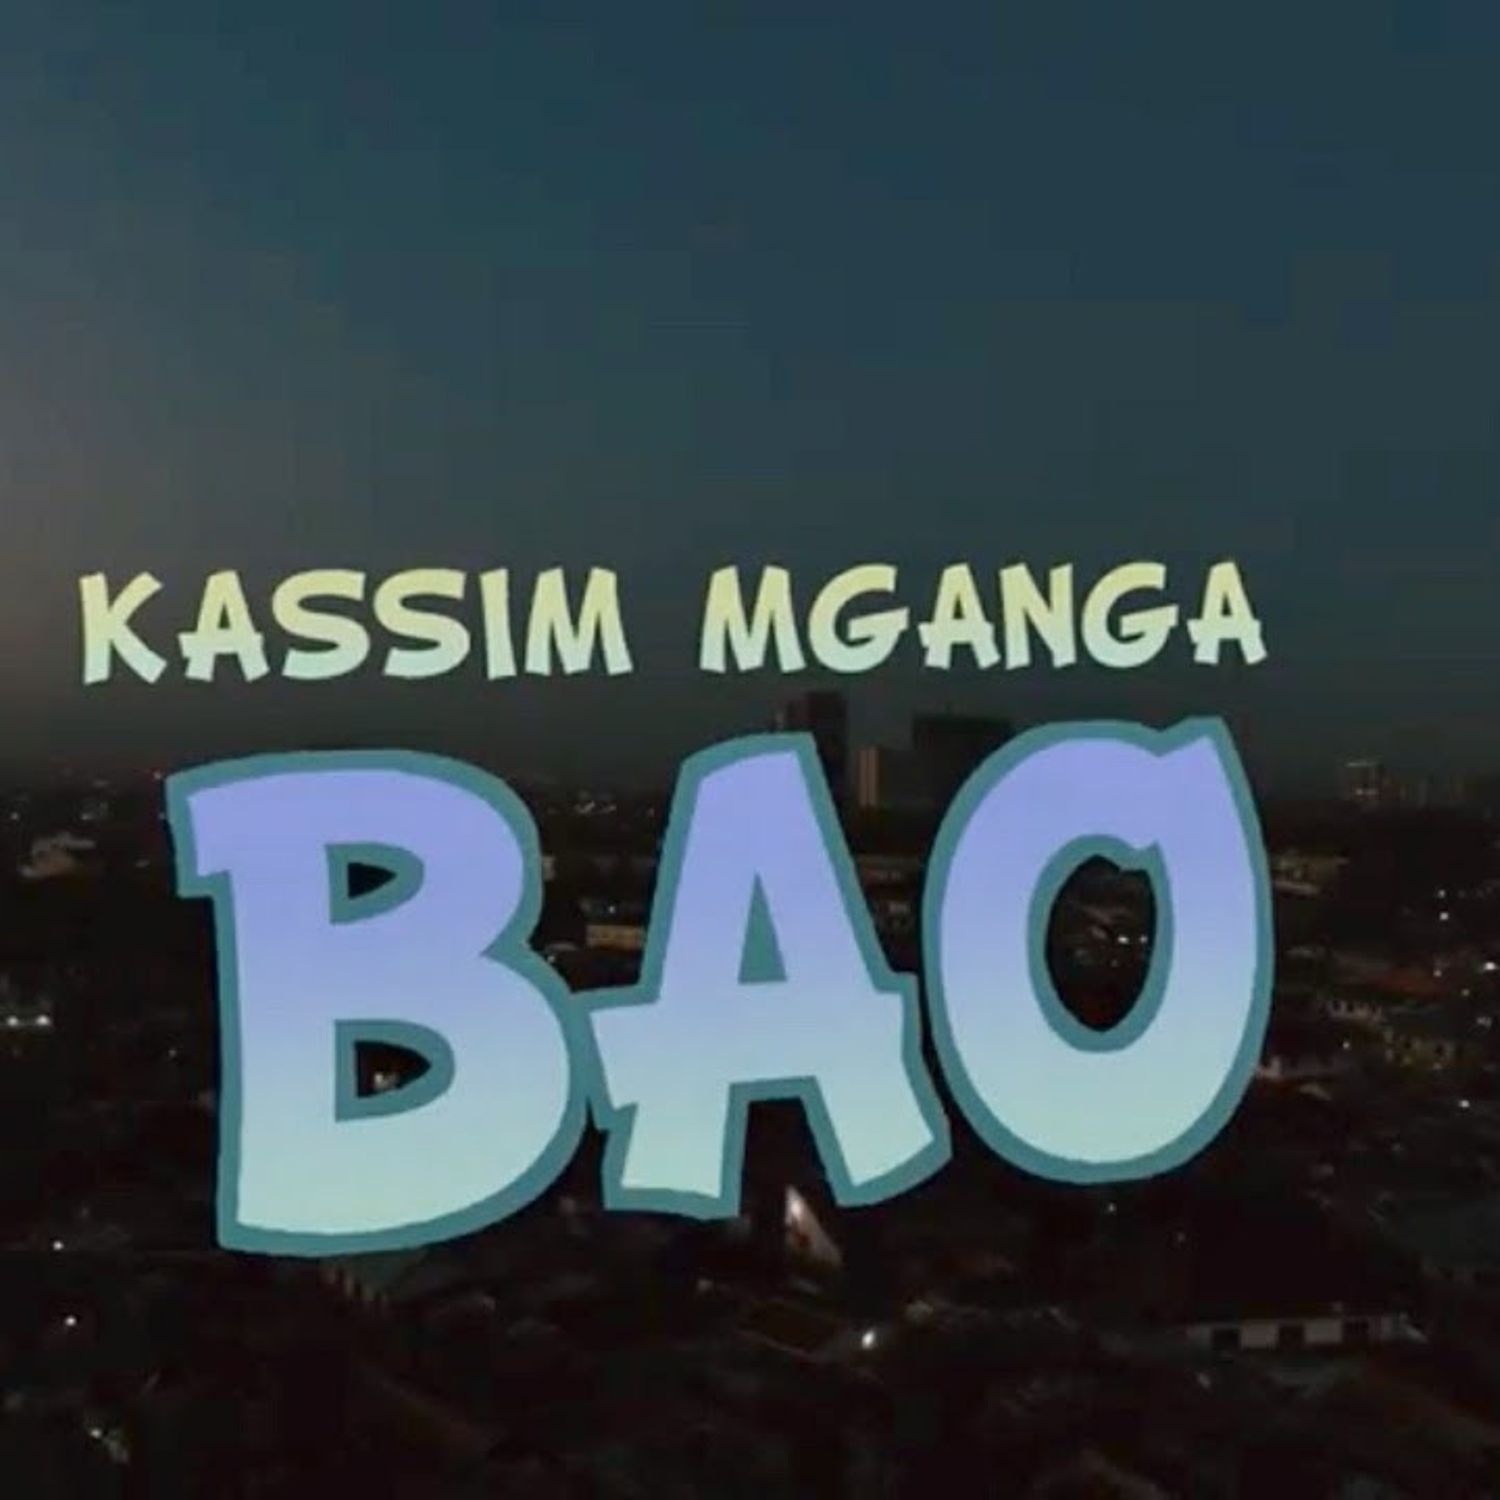 kassim mganga bao